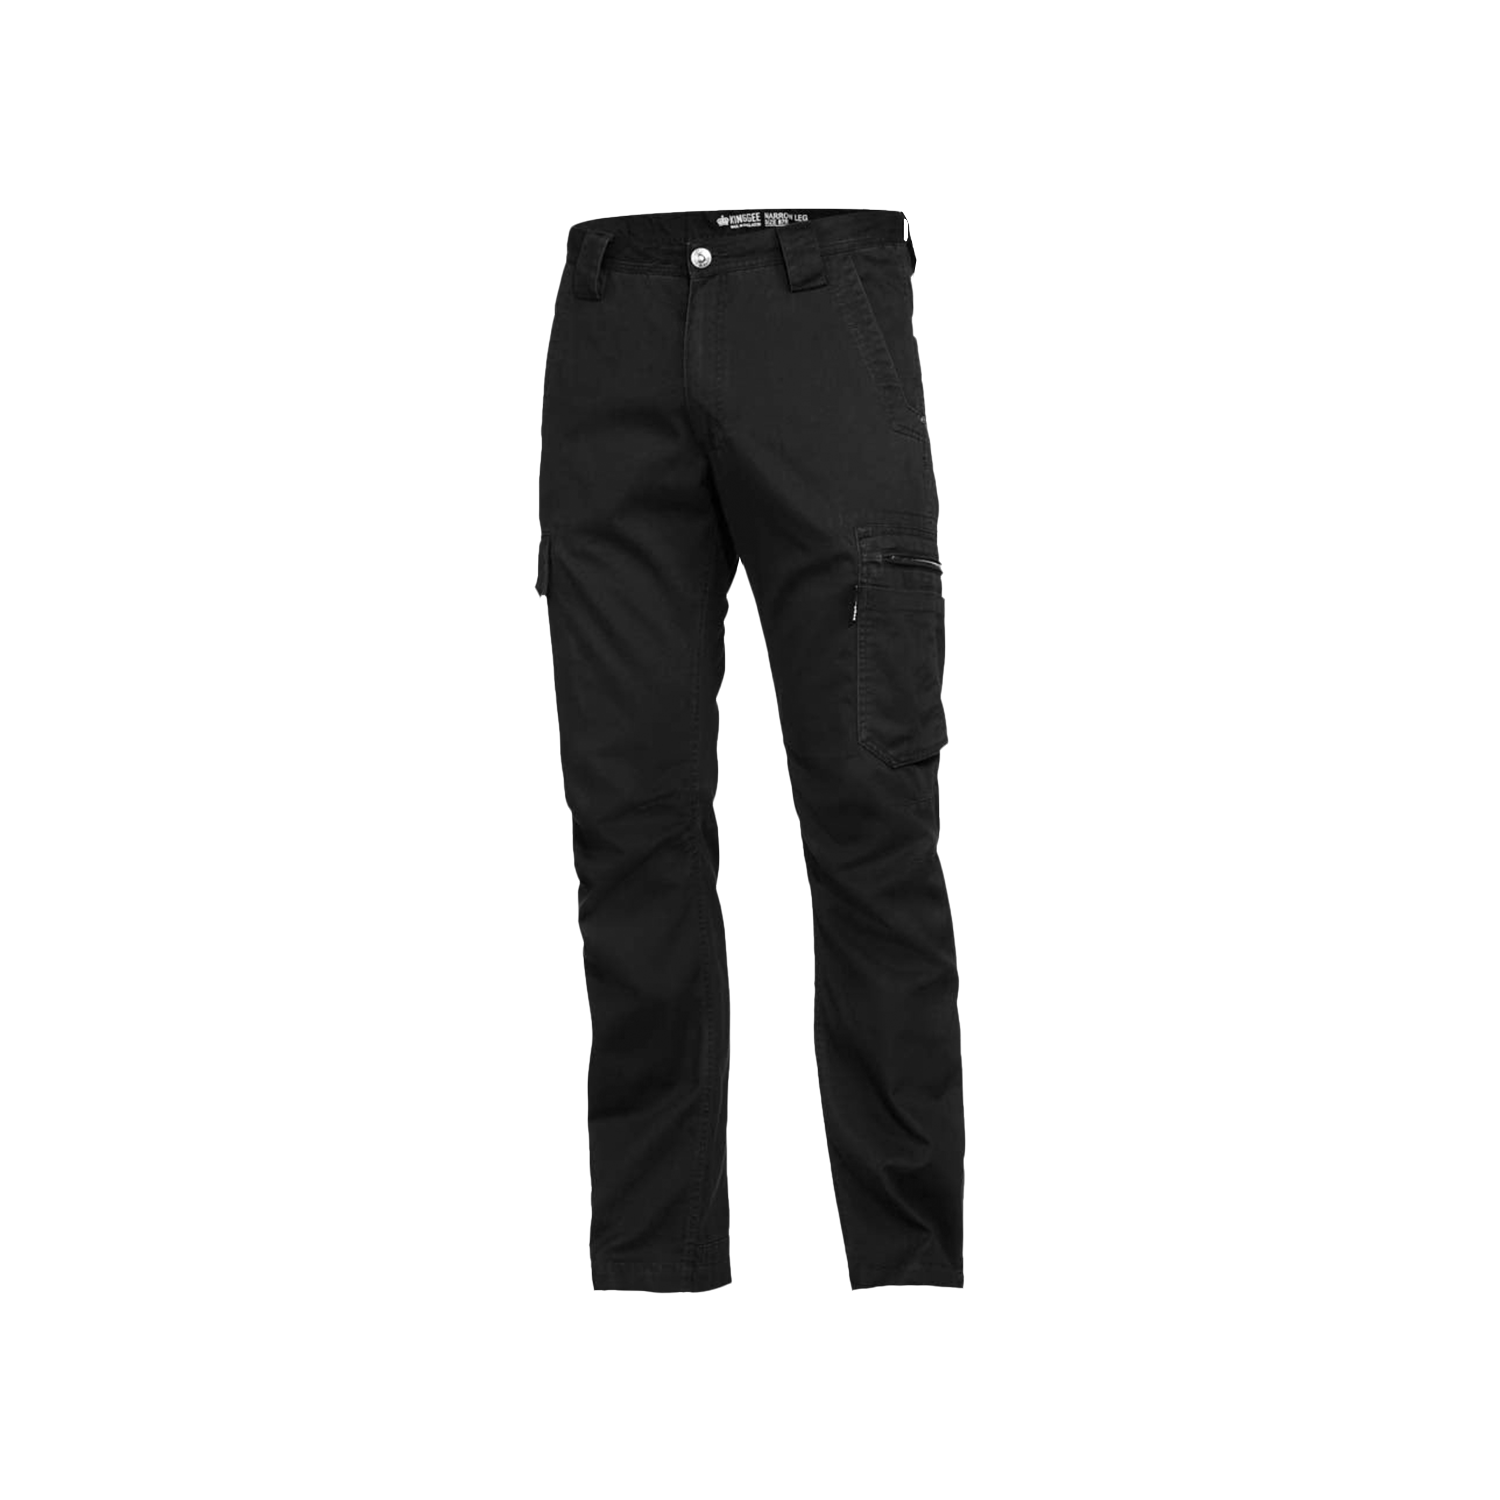 KingGee Men's Summer Tradie Pants - Black - Totally Workwear